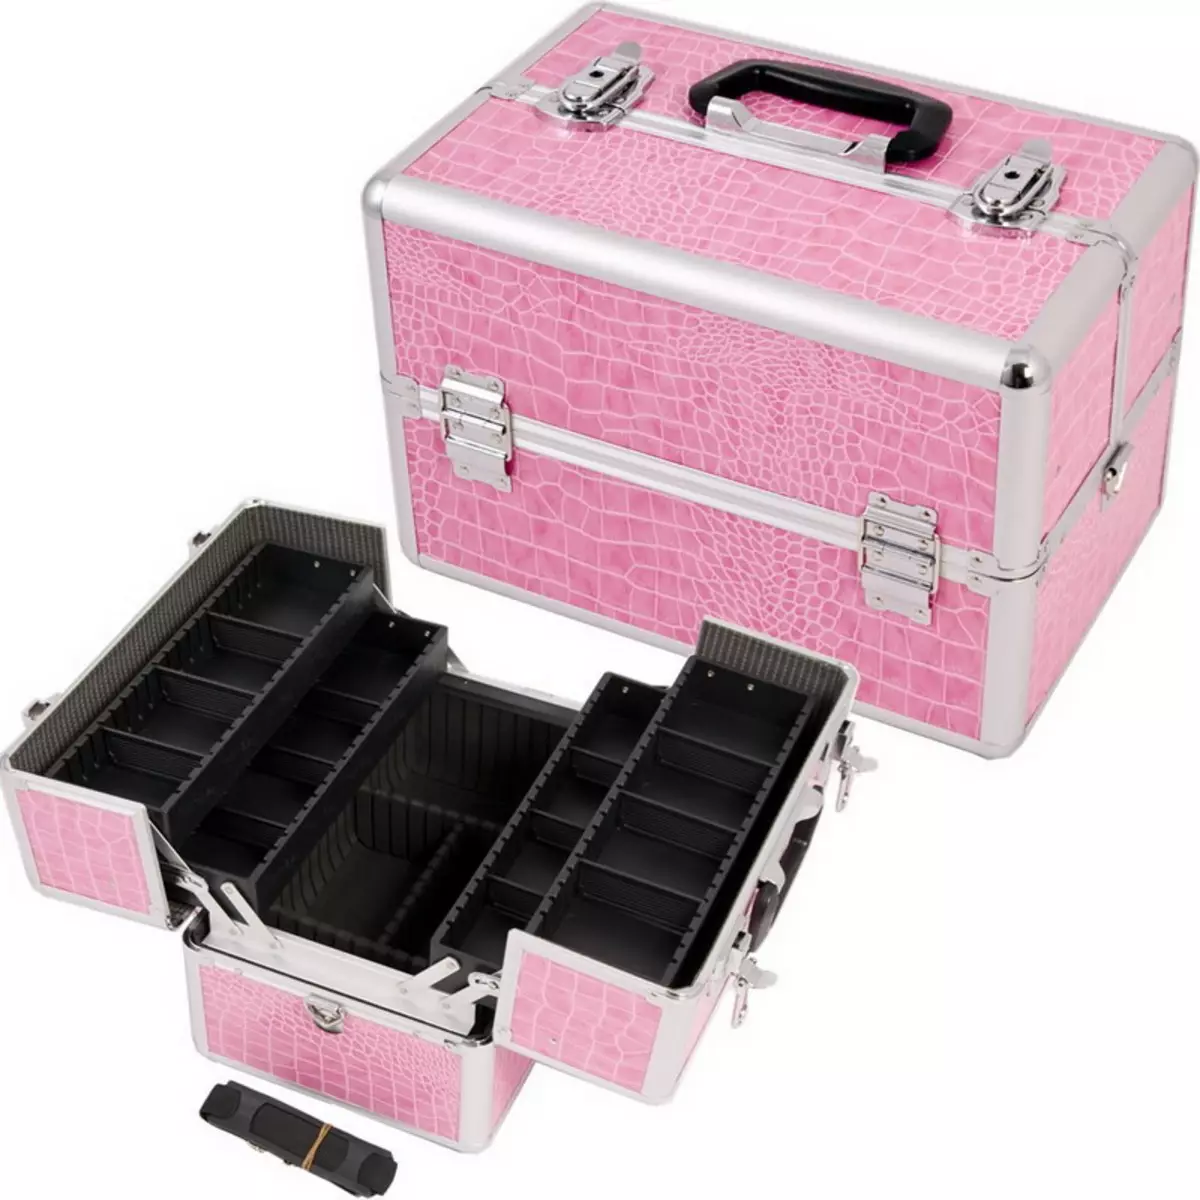 Kozmetički slučajevi (60 fotografija): kovčege na kotačima, torbi i drugoj pohranjivanju kozmetike ljepote. Izbor profesionalnih kozmetičkih slučajeva 4364_25